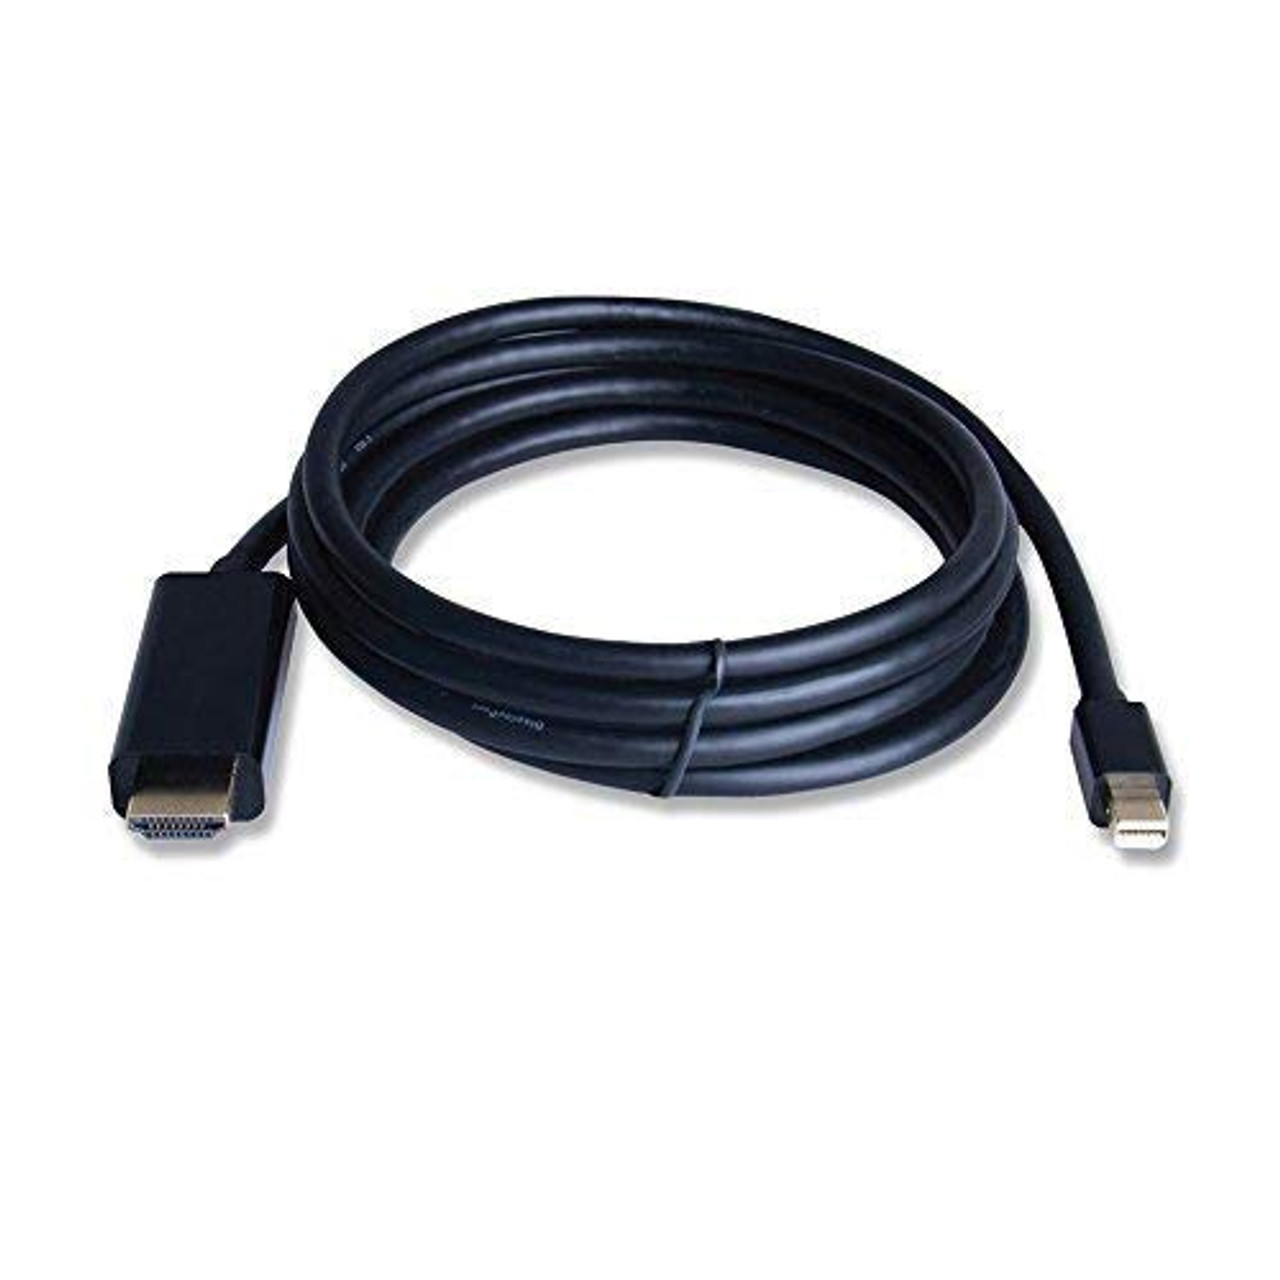 MDPHDMI2B-4K, MicroConnect Mini DisplayPort 1.2 - HDMI Cable, 4K 2m